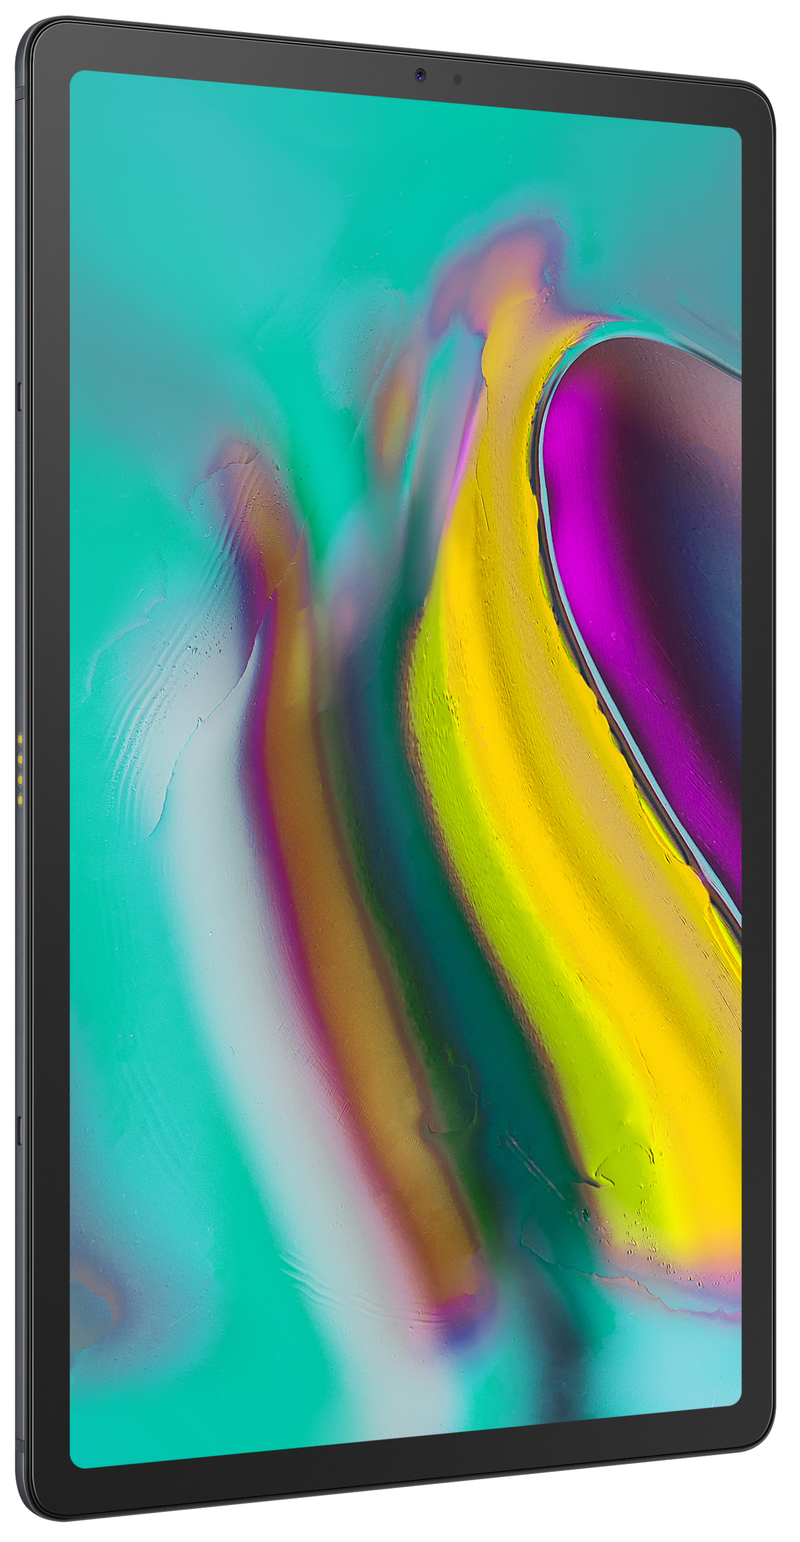 Samsung Galaxy Tab S5E 10.5-inch 64GB Tablet - Black